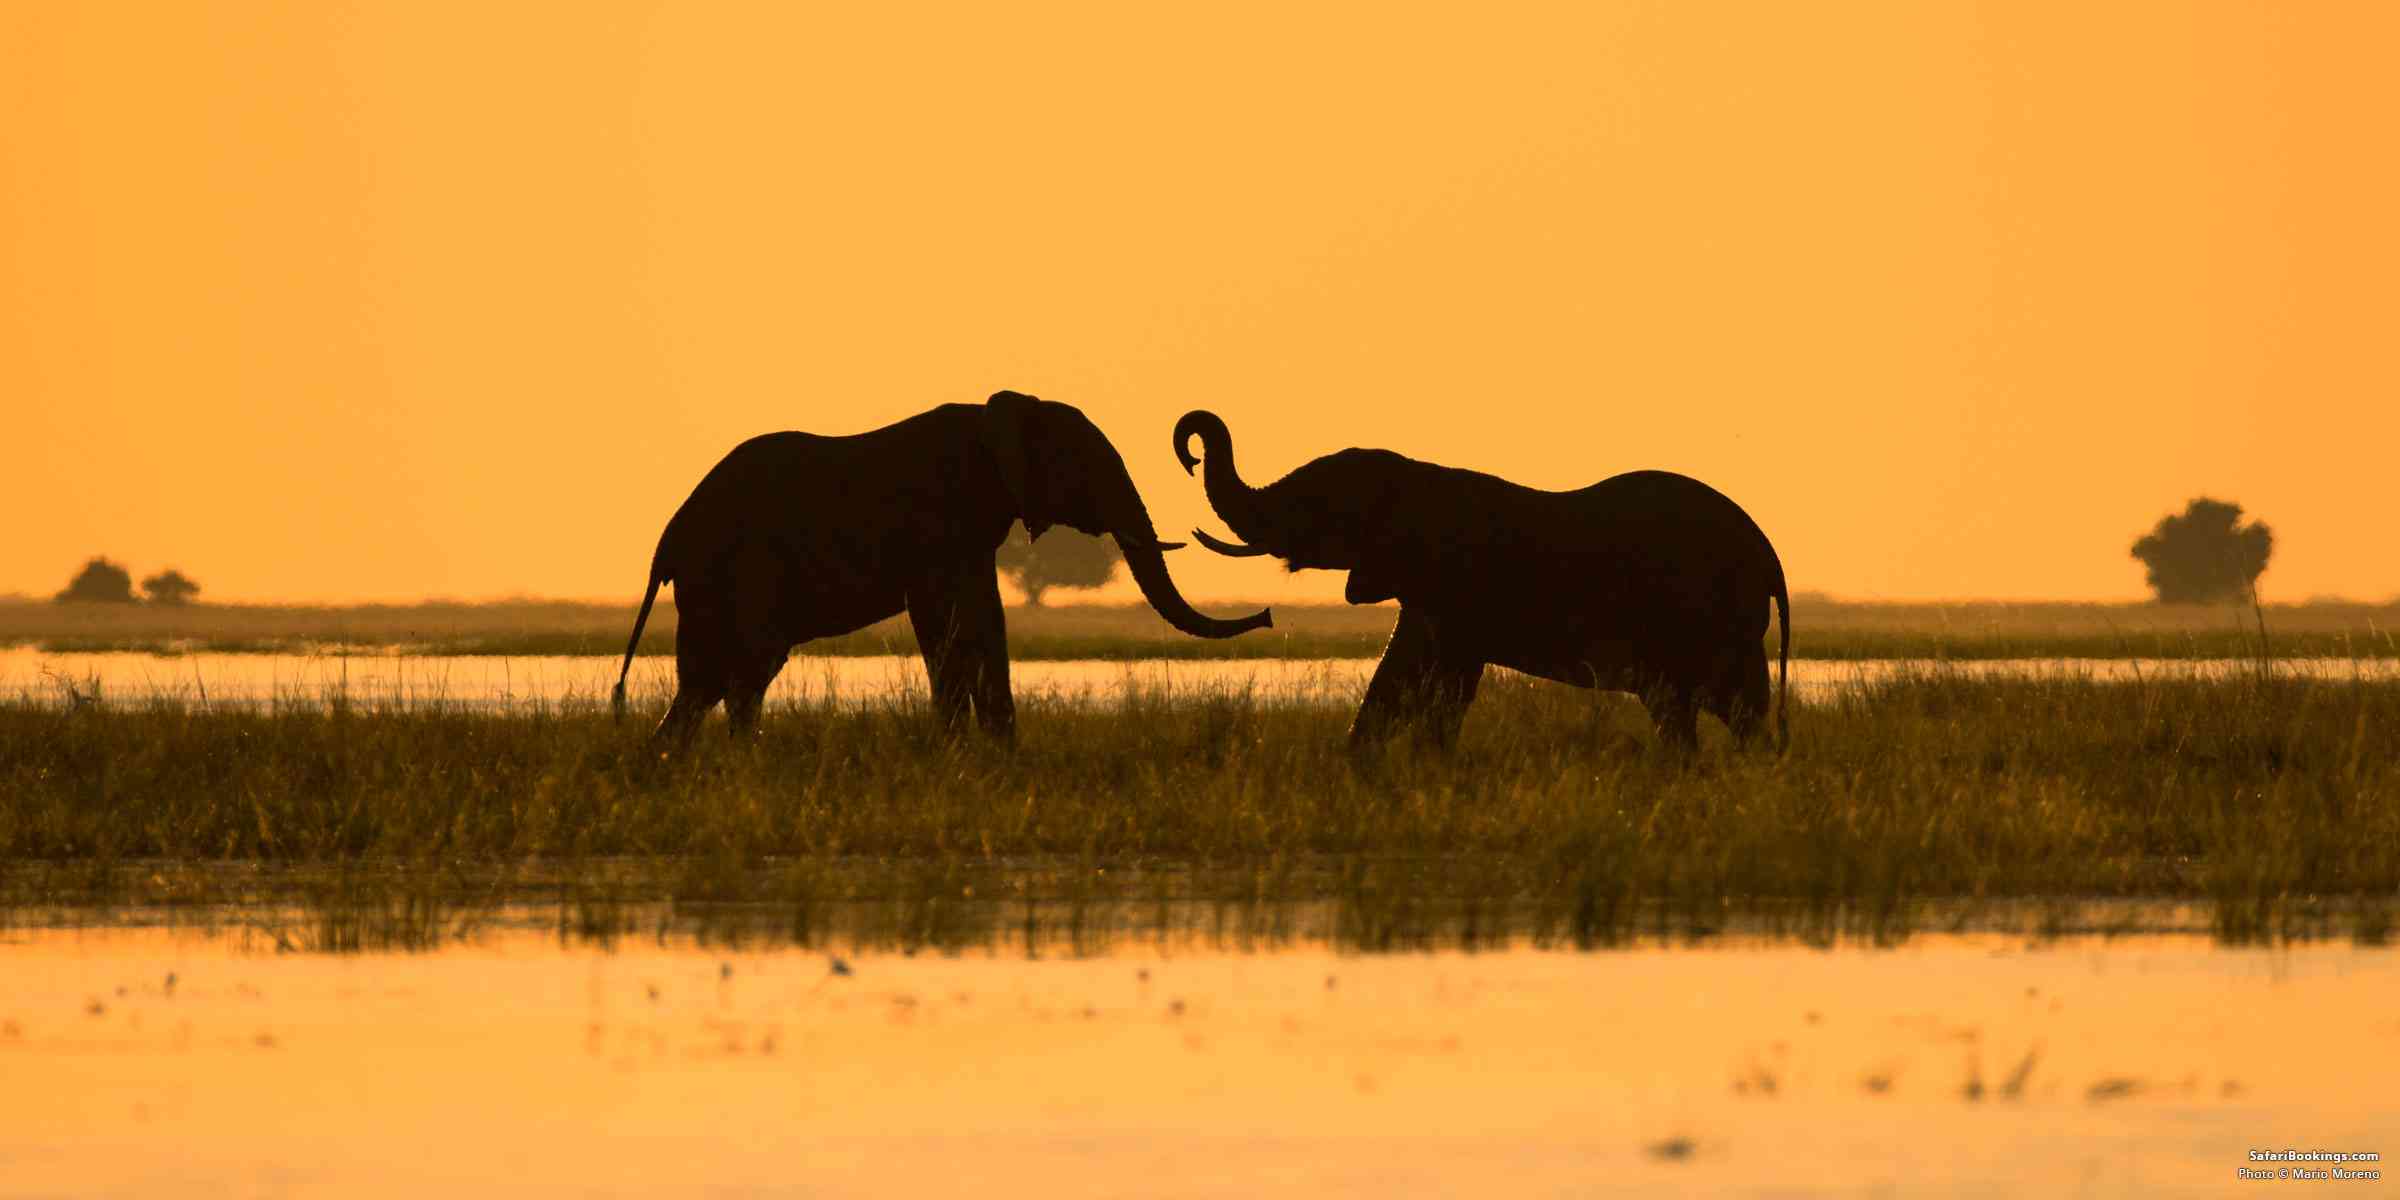 Top 10 Reasons to Go on Safari